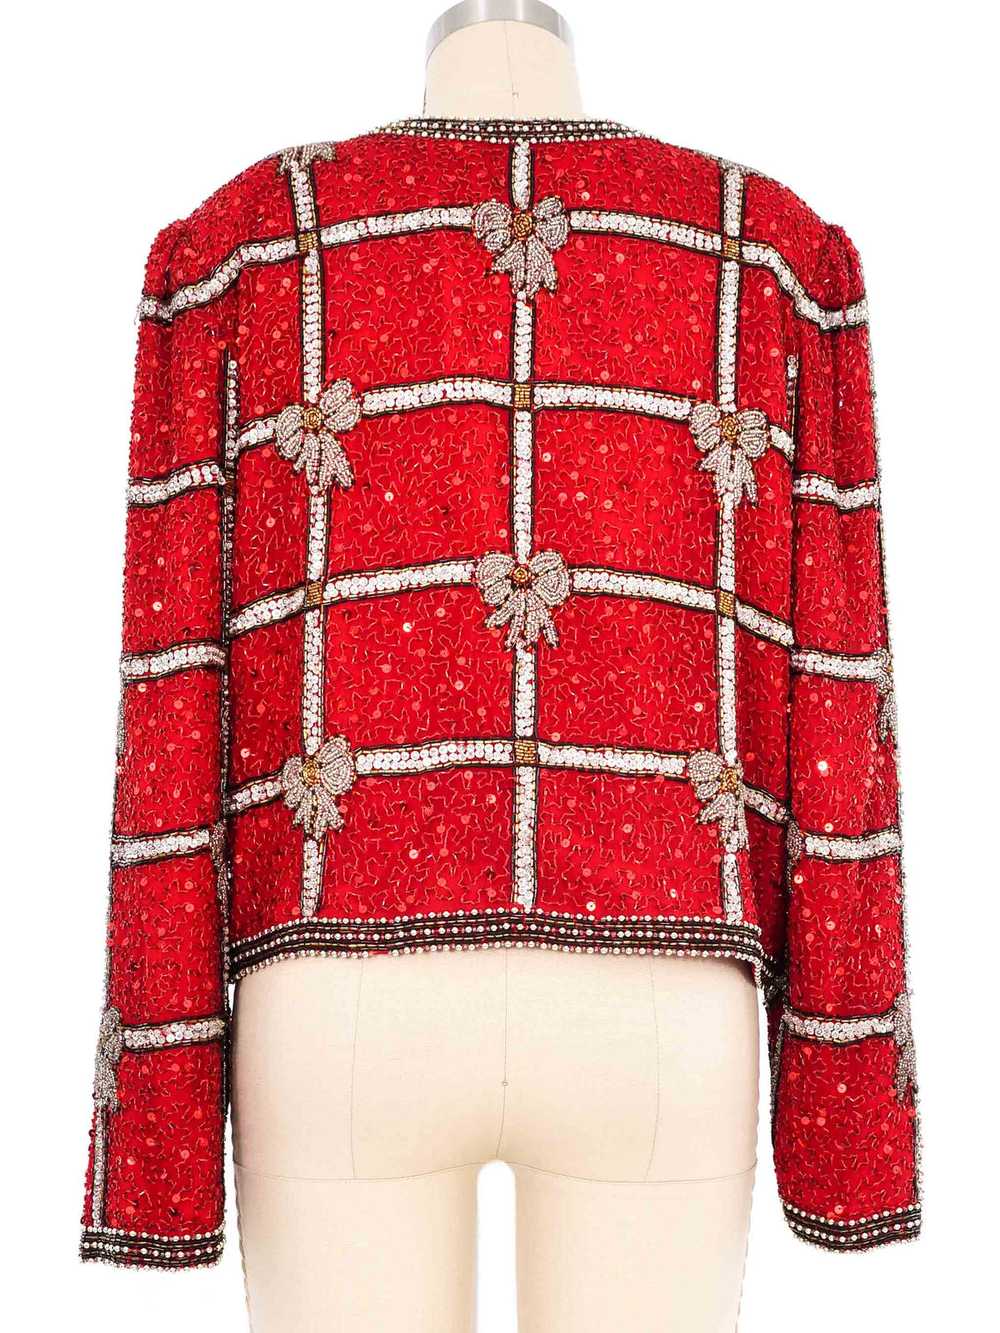 Sequin Plaid Bow Jacket - image 4